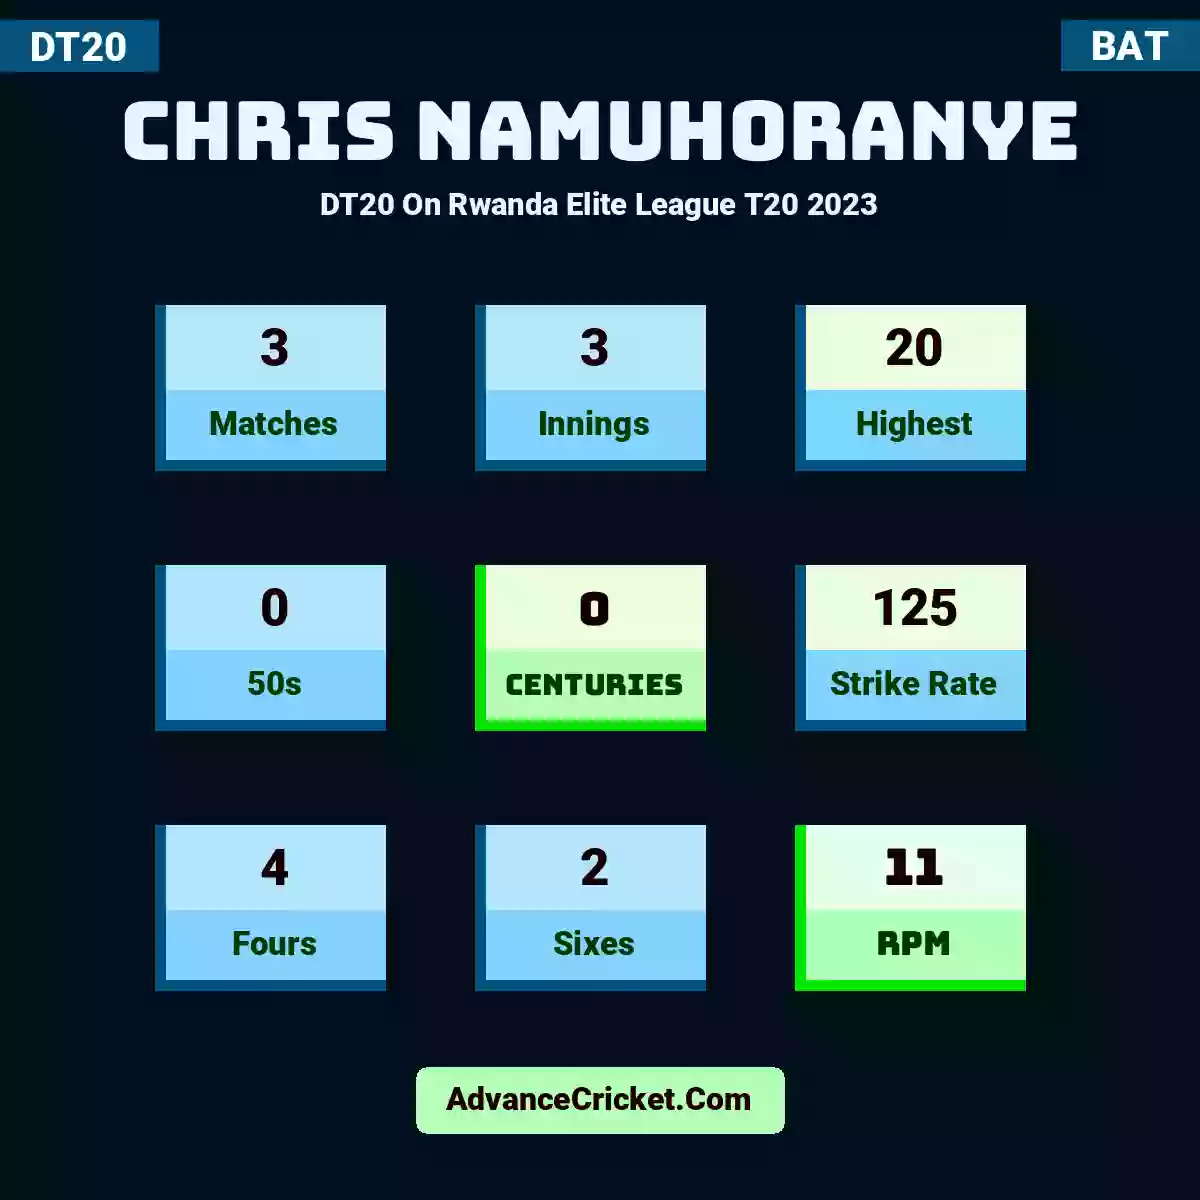 Chris Namuhoranye DT20  On Rwanda Elite League T20 2023, Chris Namuhoranye played 3 matches, scored 20 runs as highest, 0 half-centuries, and 0 centuries, with a strike rate of 125. C.Namuhoranye hit 4 fours and 2 sixes, with an RPM of 11.